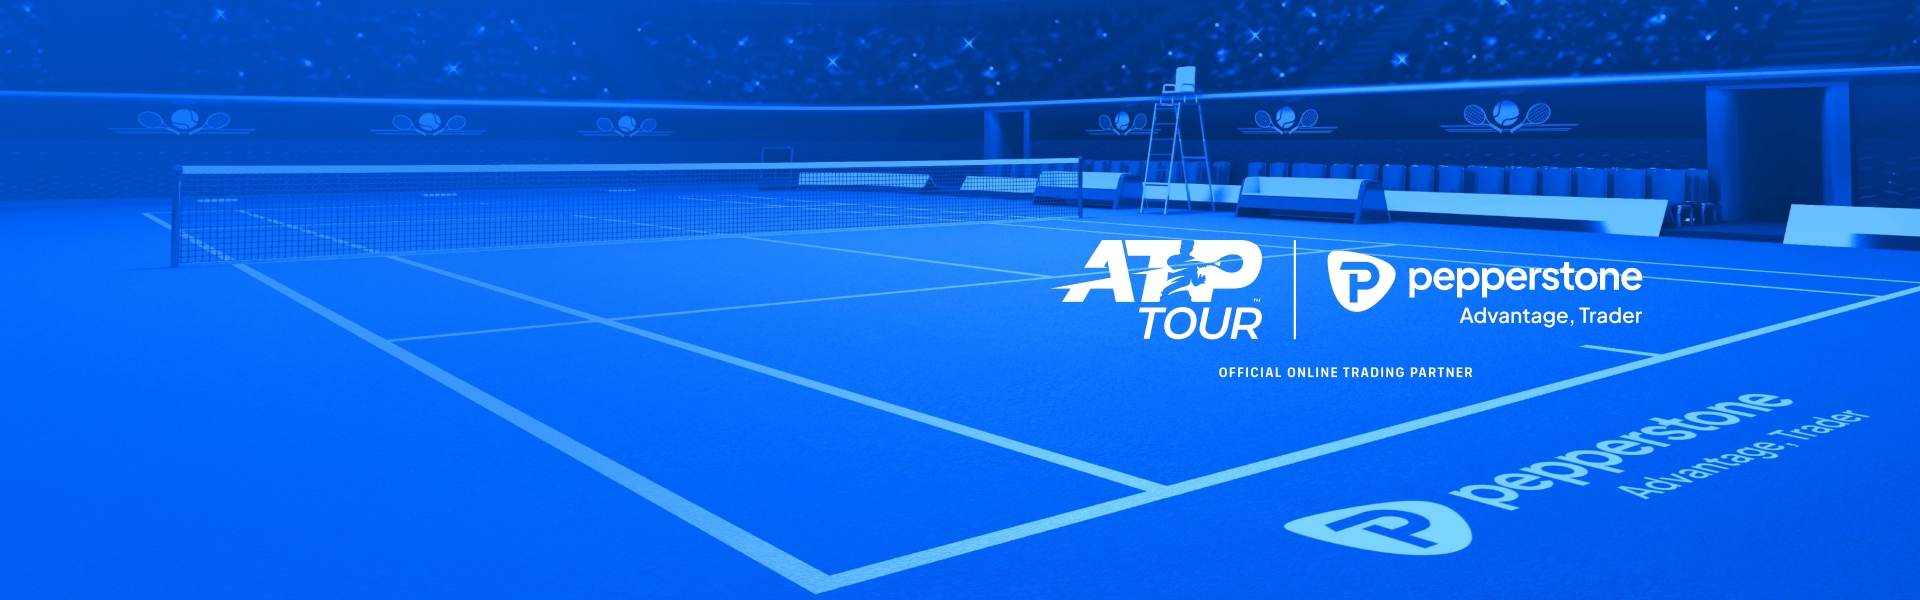 ATP blue tennis court